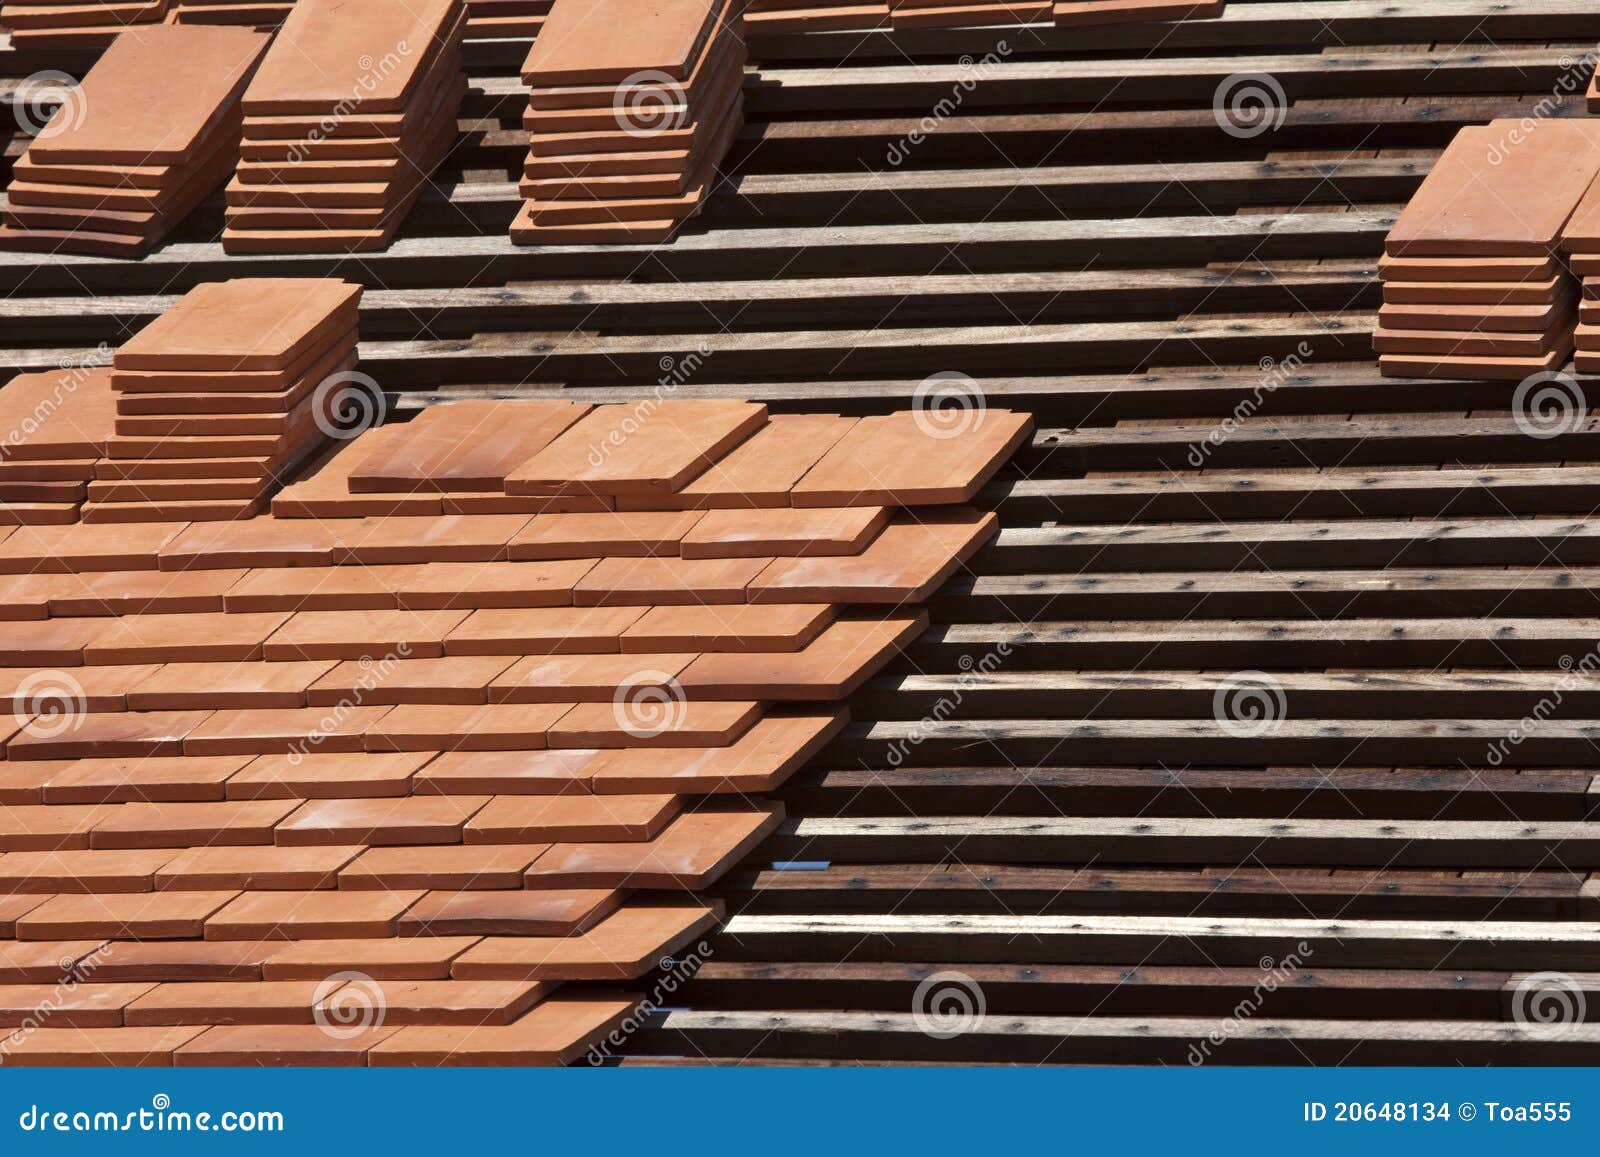 arrange asian roof tiles